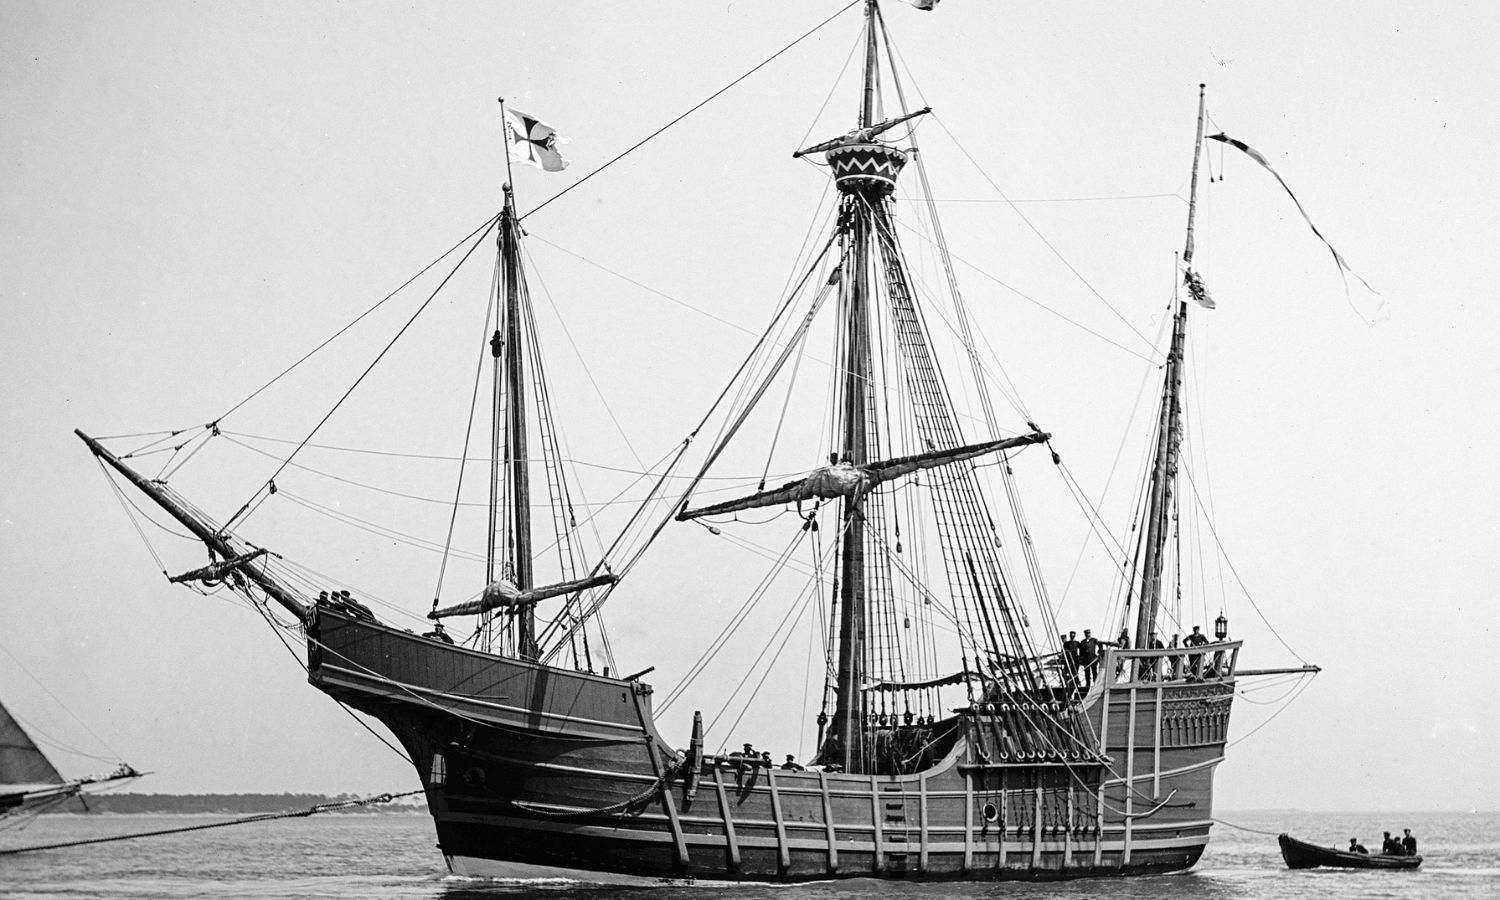 OTD in 1492: The Santa Maria sunk.